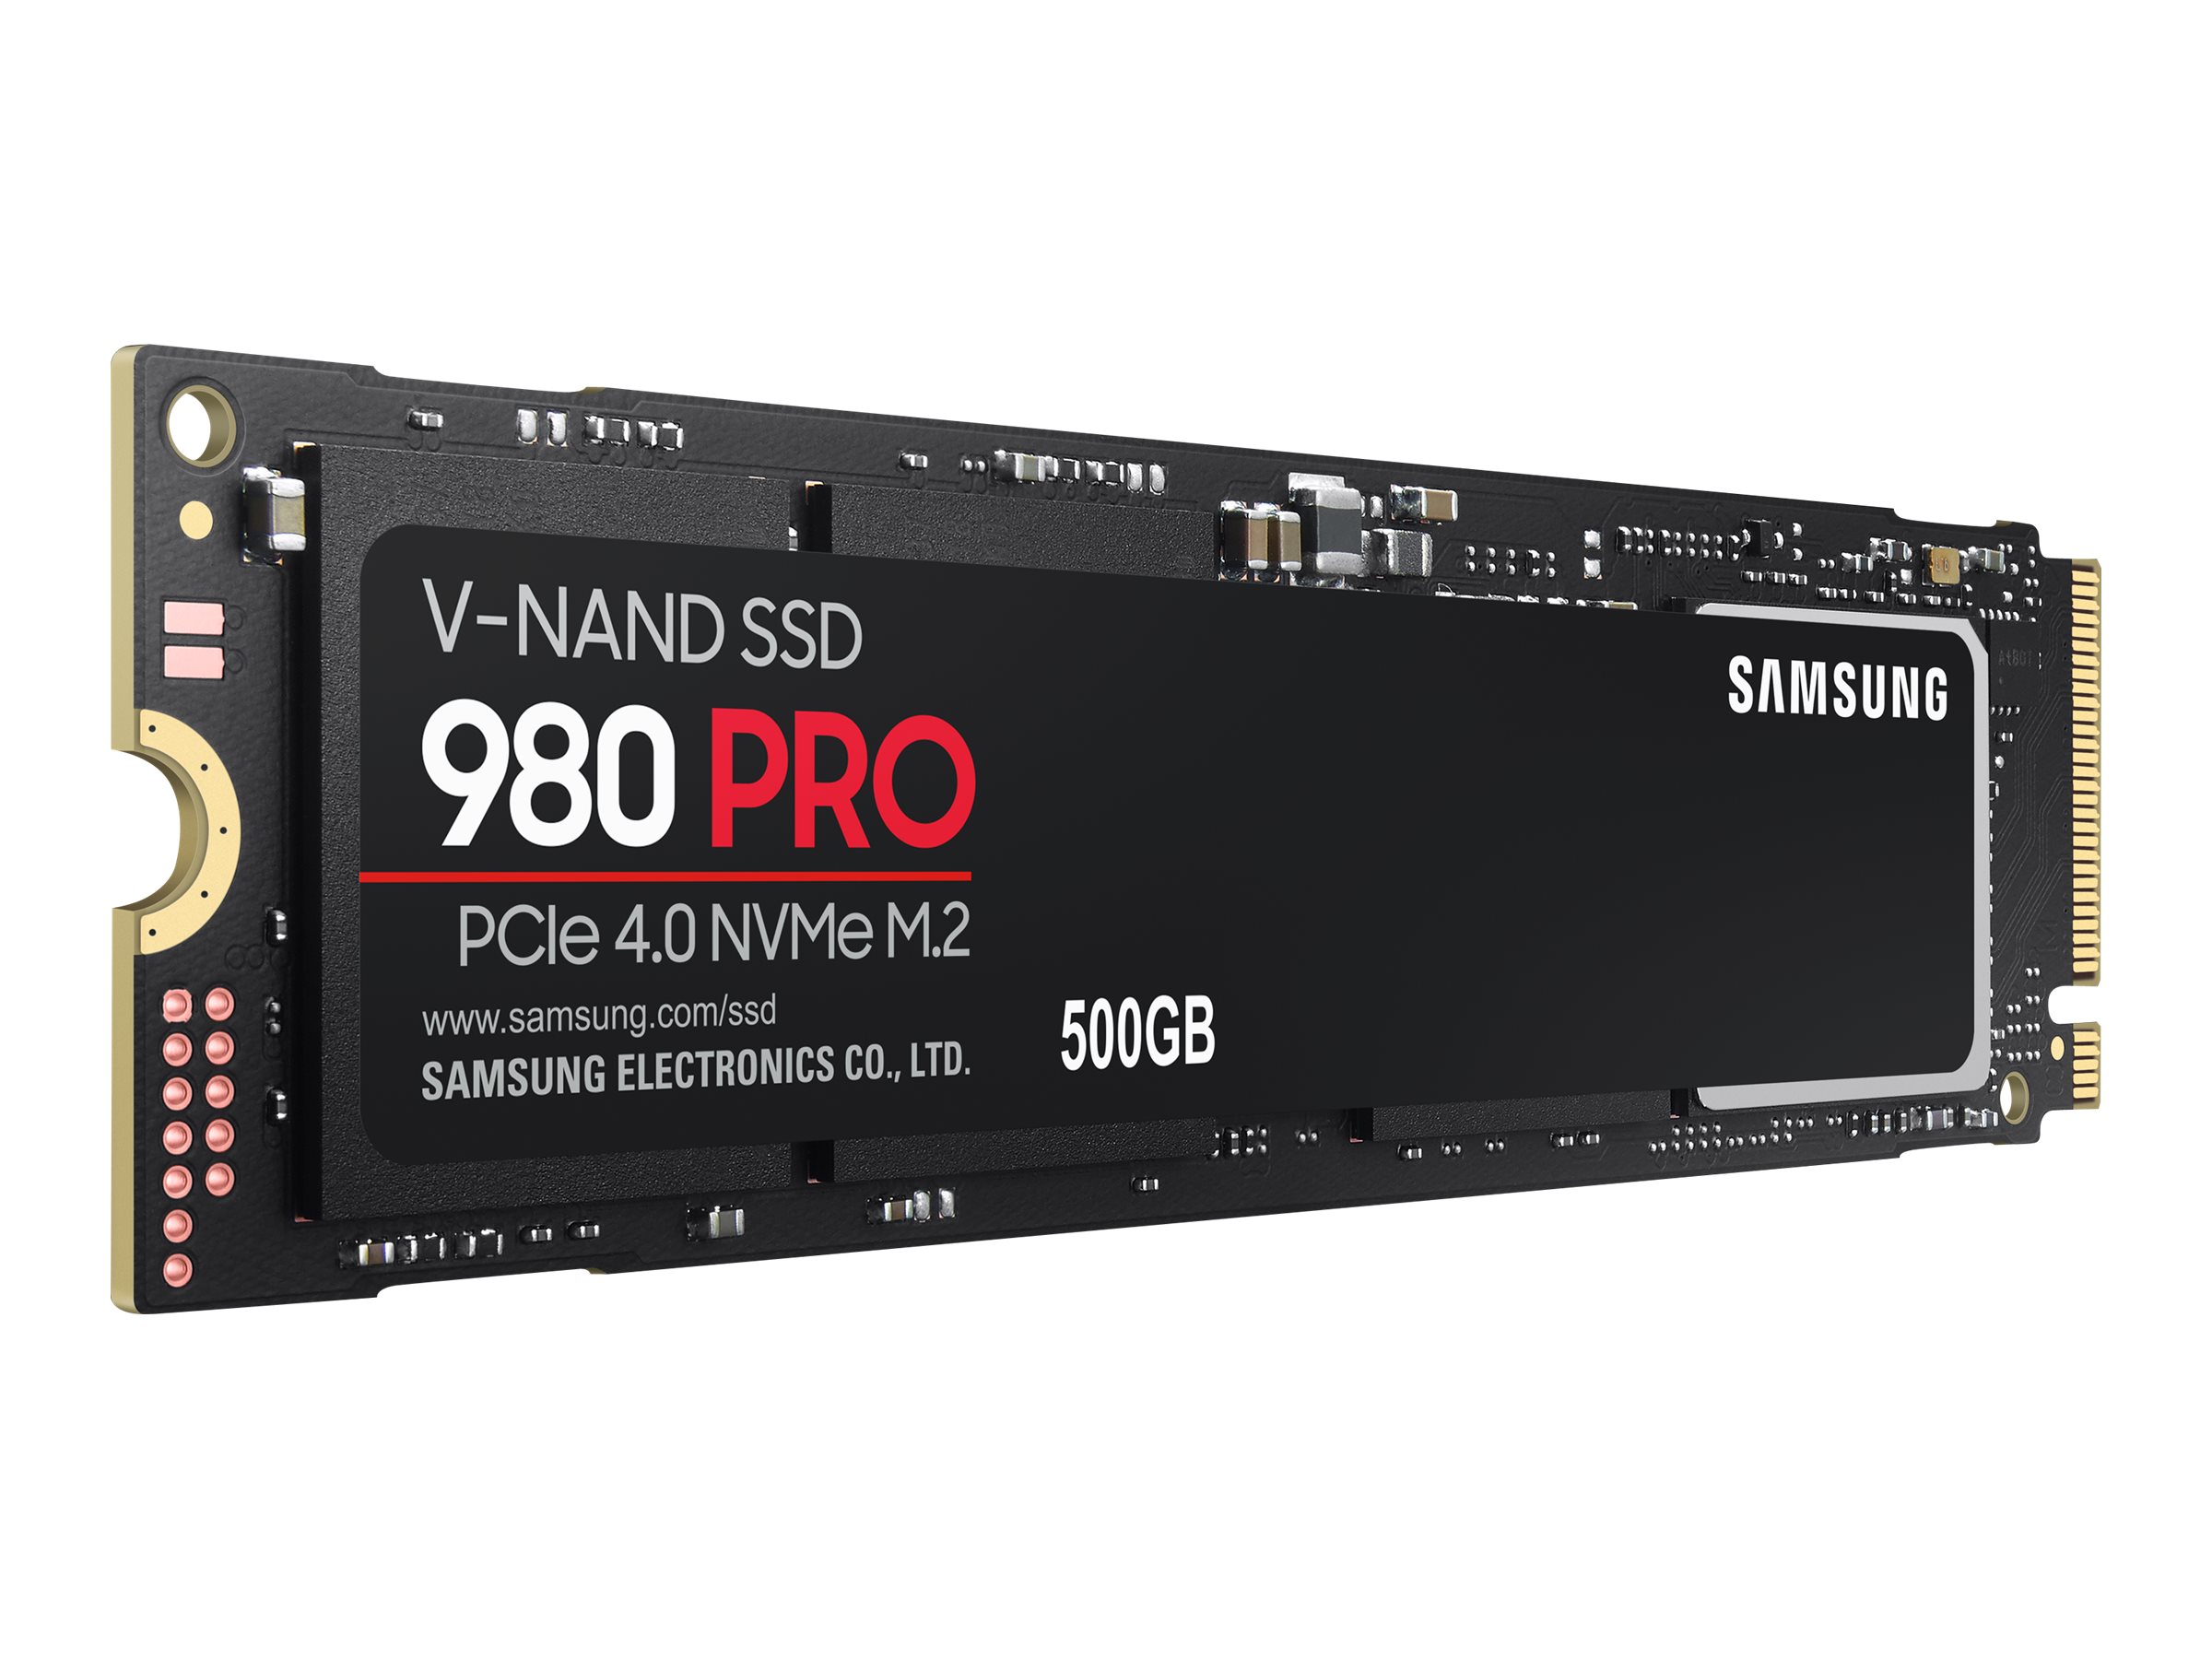 Samsung 980 Pro 500GB - PCIe 4.0 - M.2 NVMe SSD